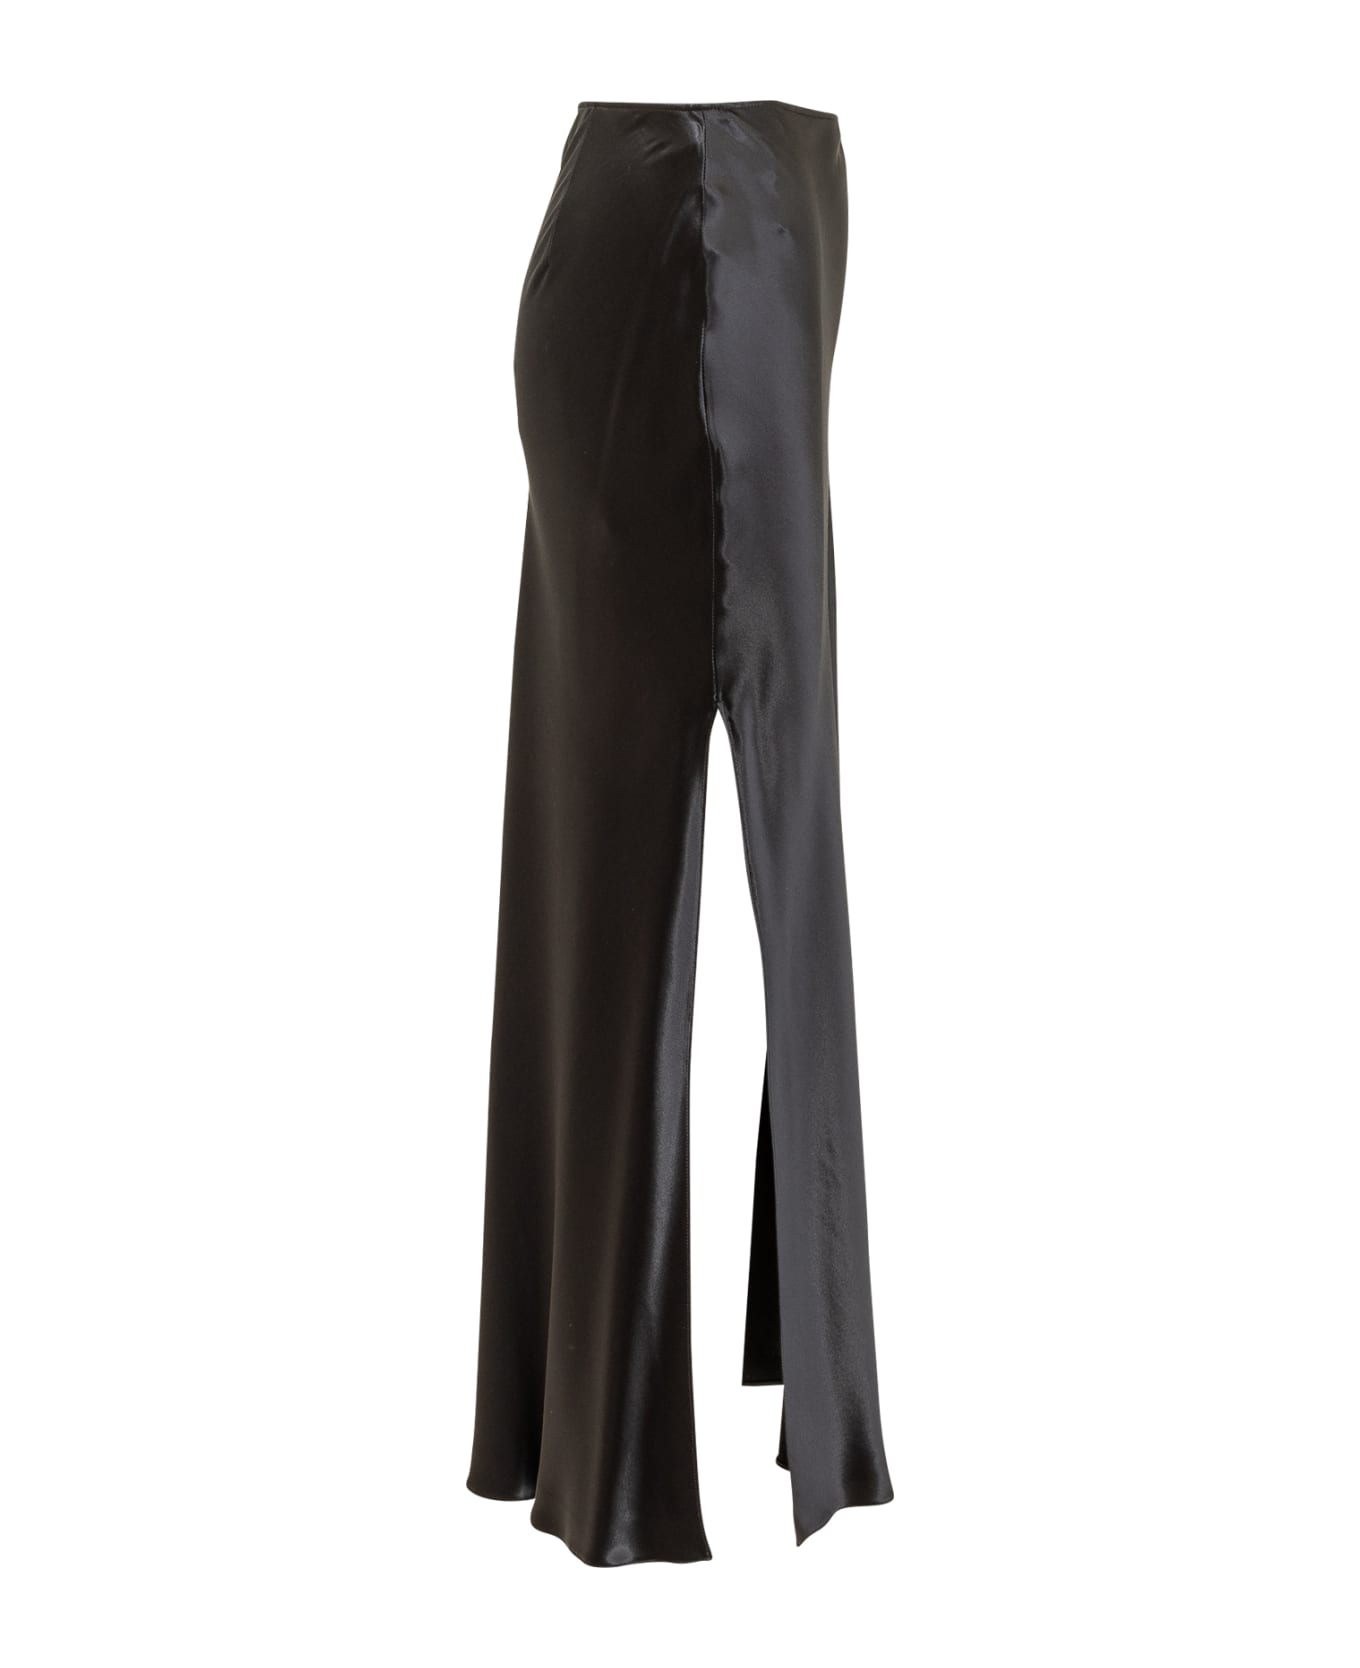 Ferragamo Satin Skirt Longuette - NERO/BIANCO スカート